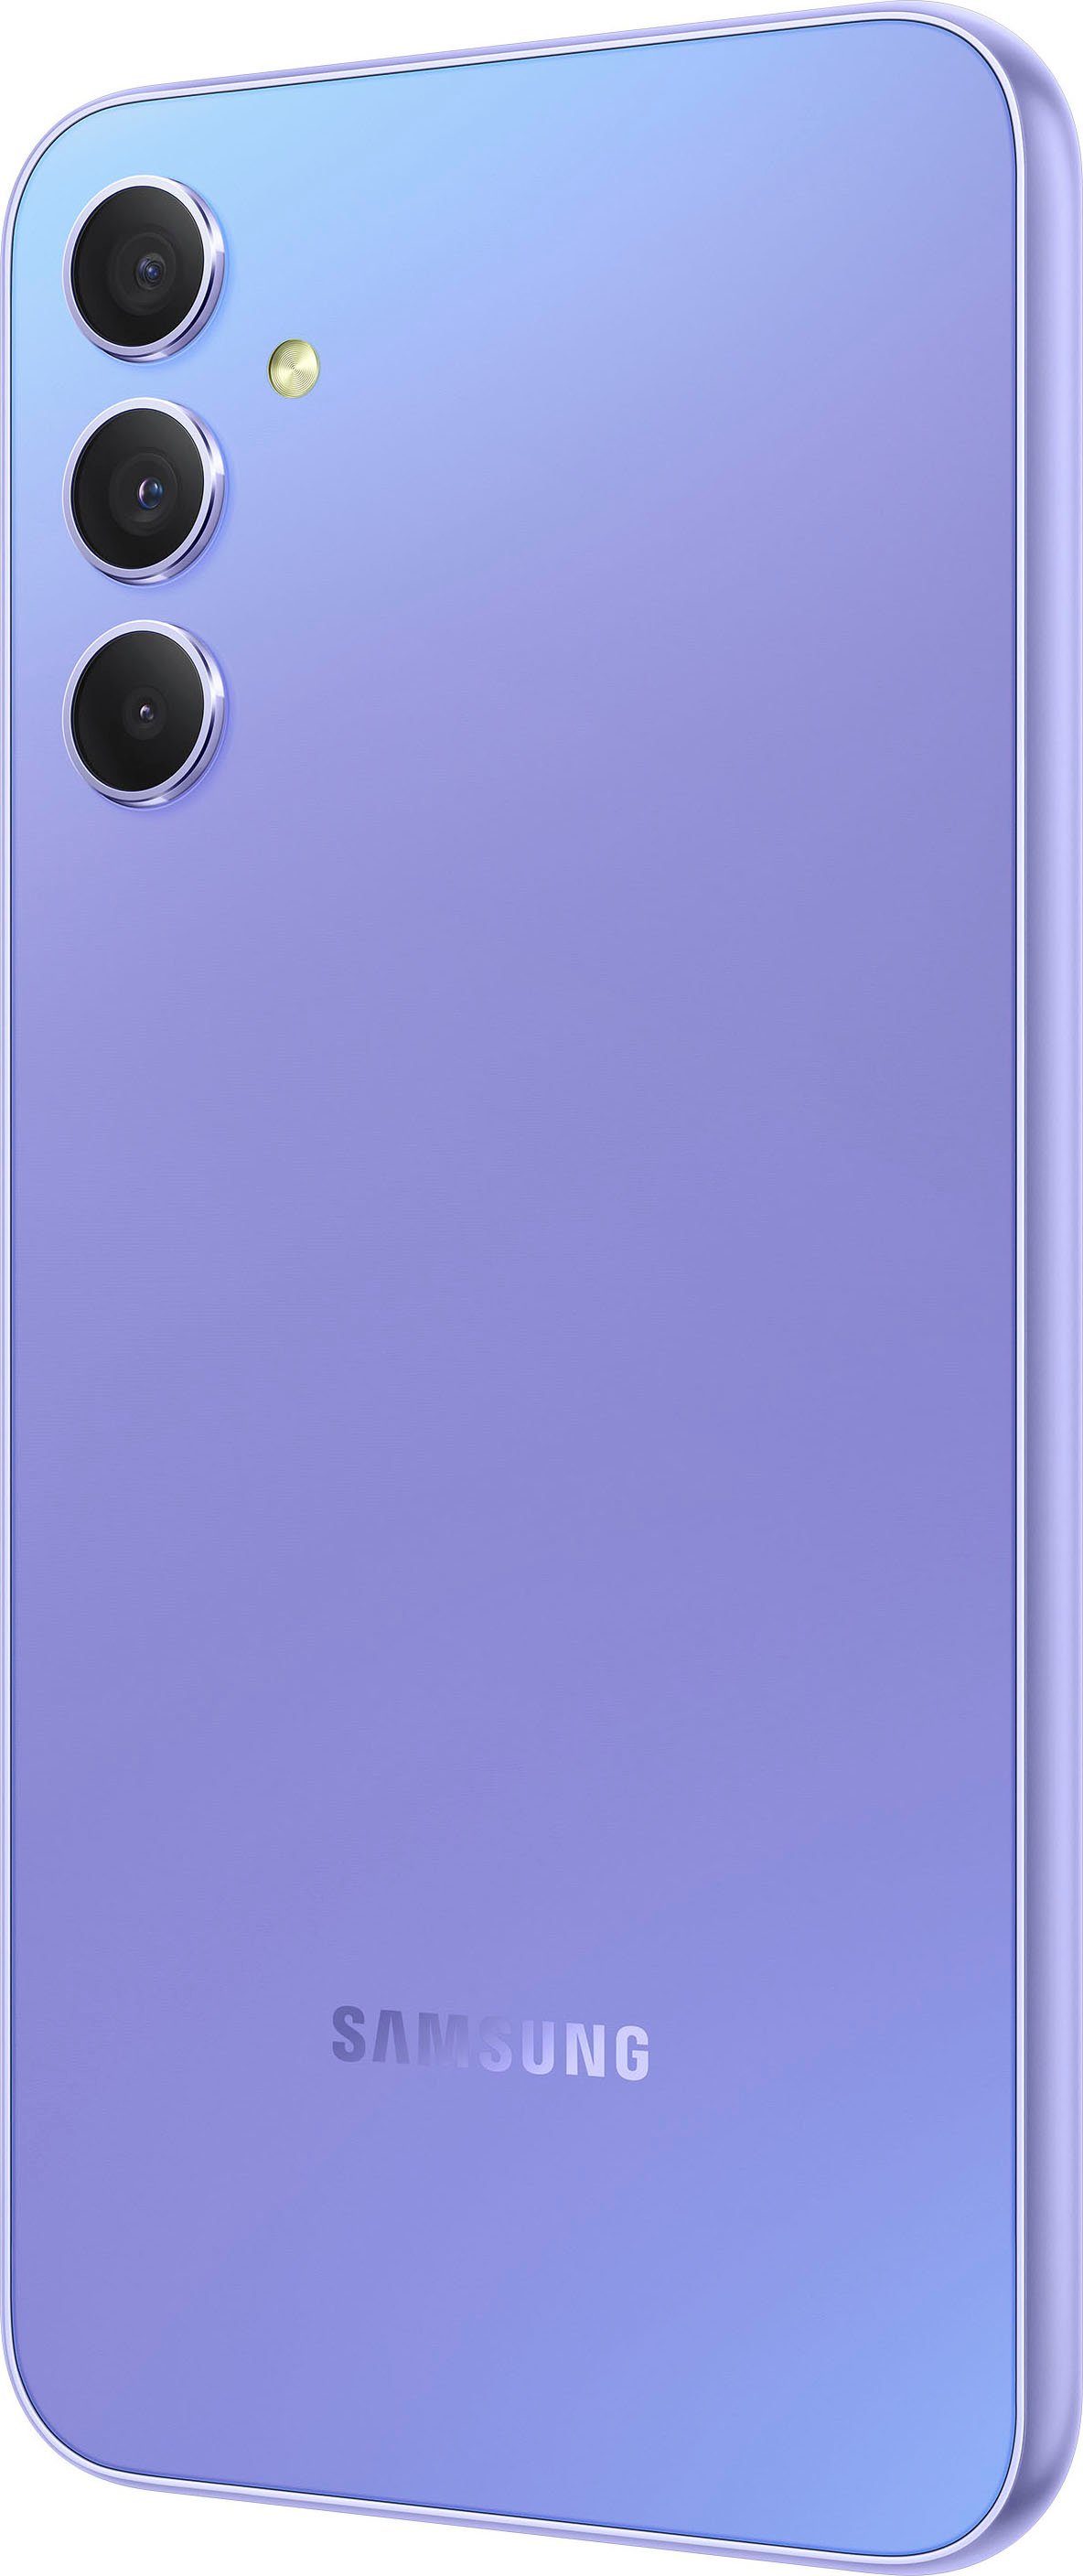 Zoll, Speicherplatz, 256GB GB Samsung MP cm/6,6 5G Kamera) (16,65 violett leicht 256 A34 Smartphone 48 Galaxy